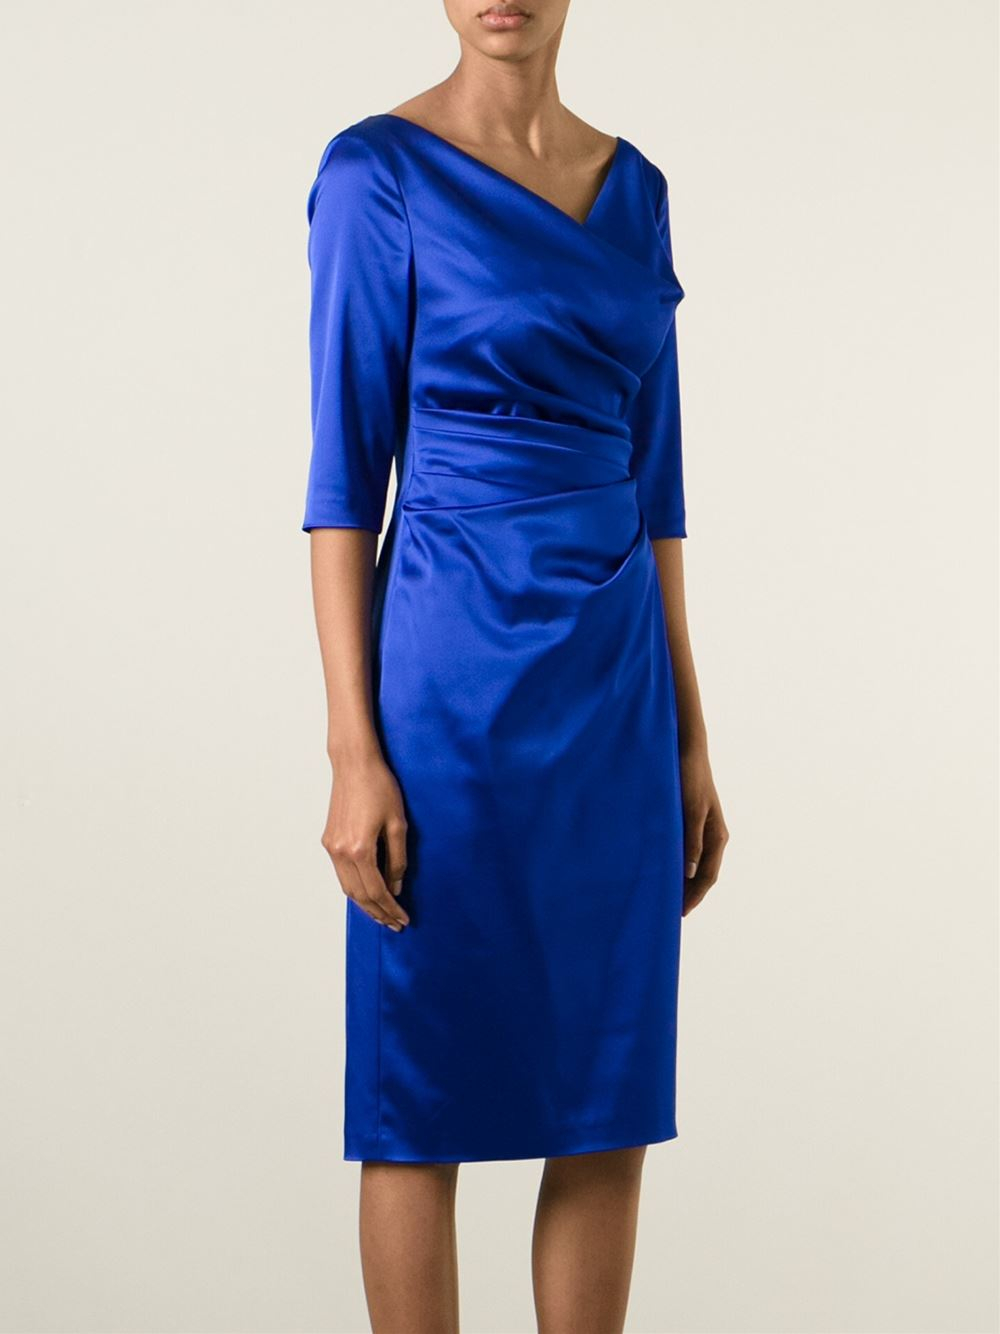 Talbot runhof Colly Dress in Blue | Lyst